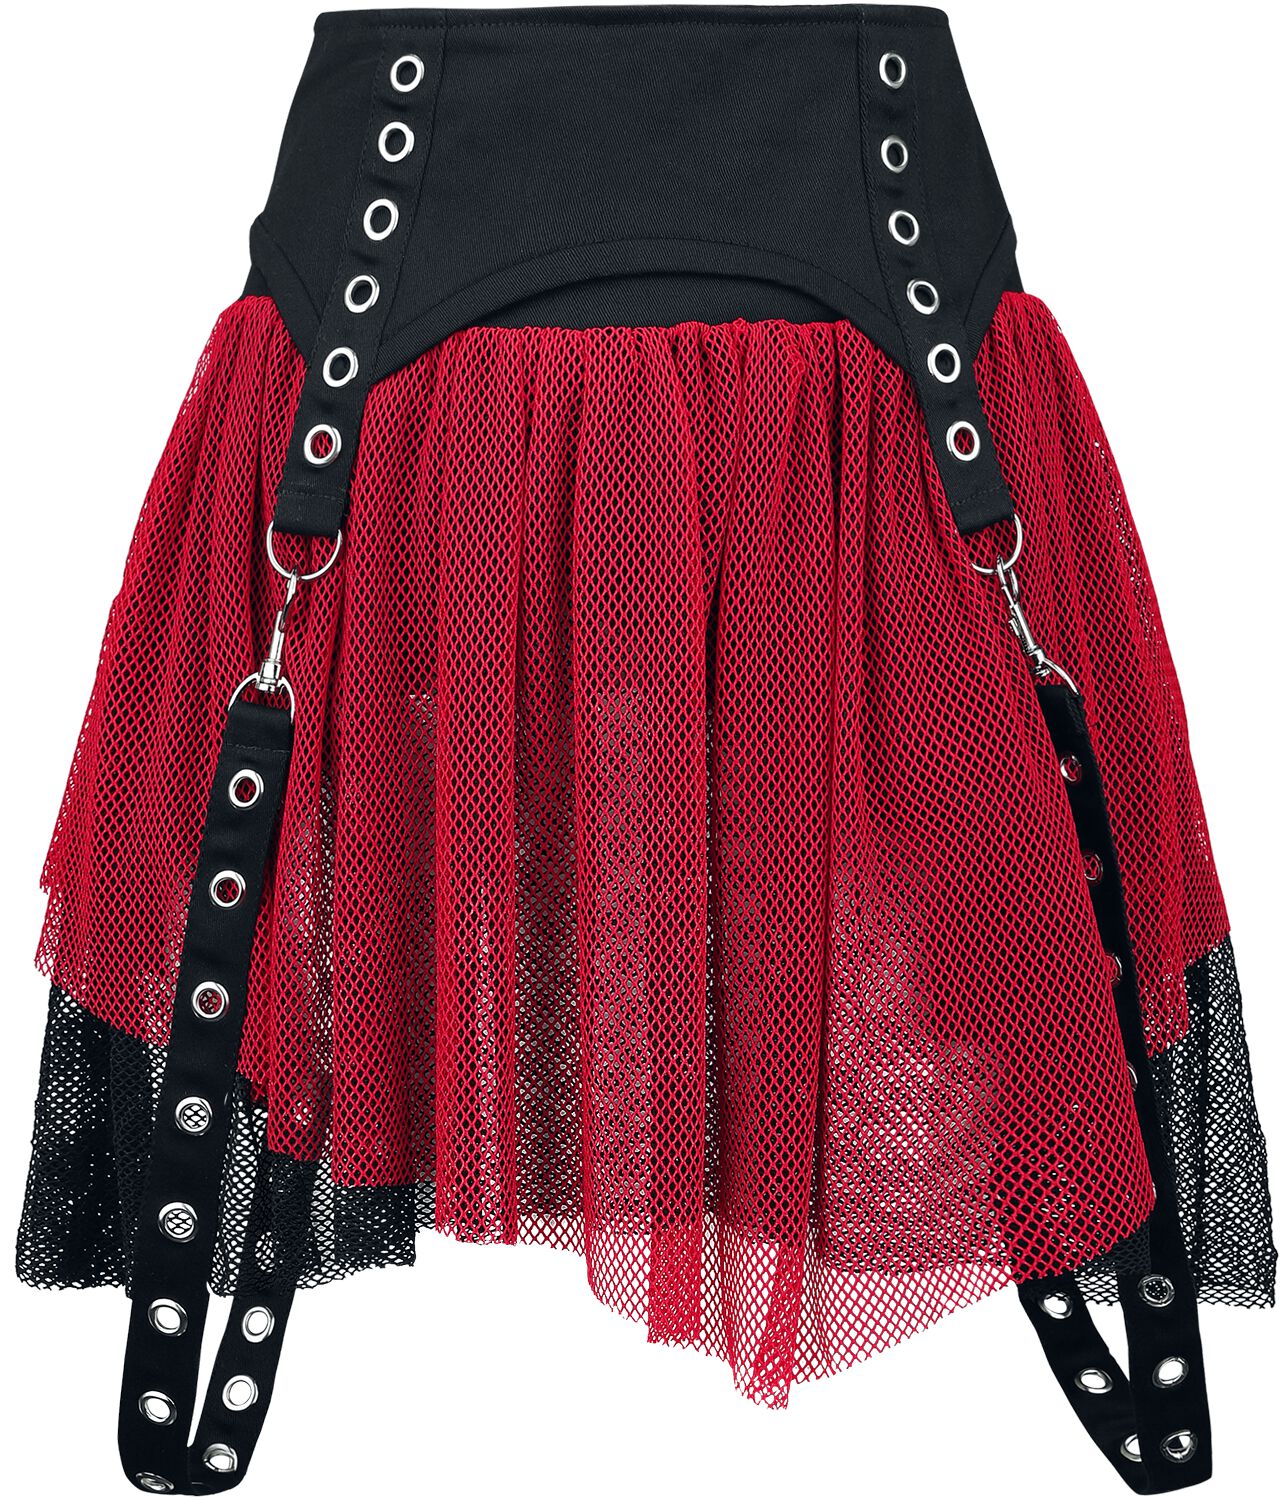 Poizen Industries Cybele Skirt Kurzer Rock schwarz rot in XL